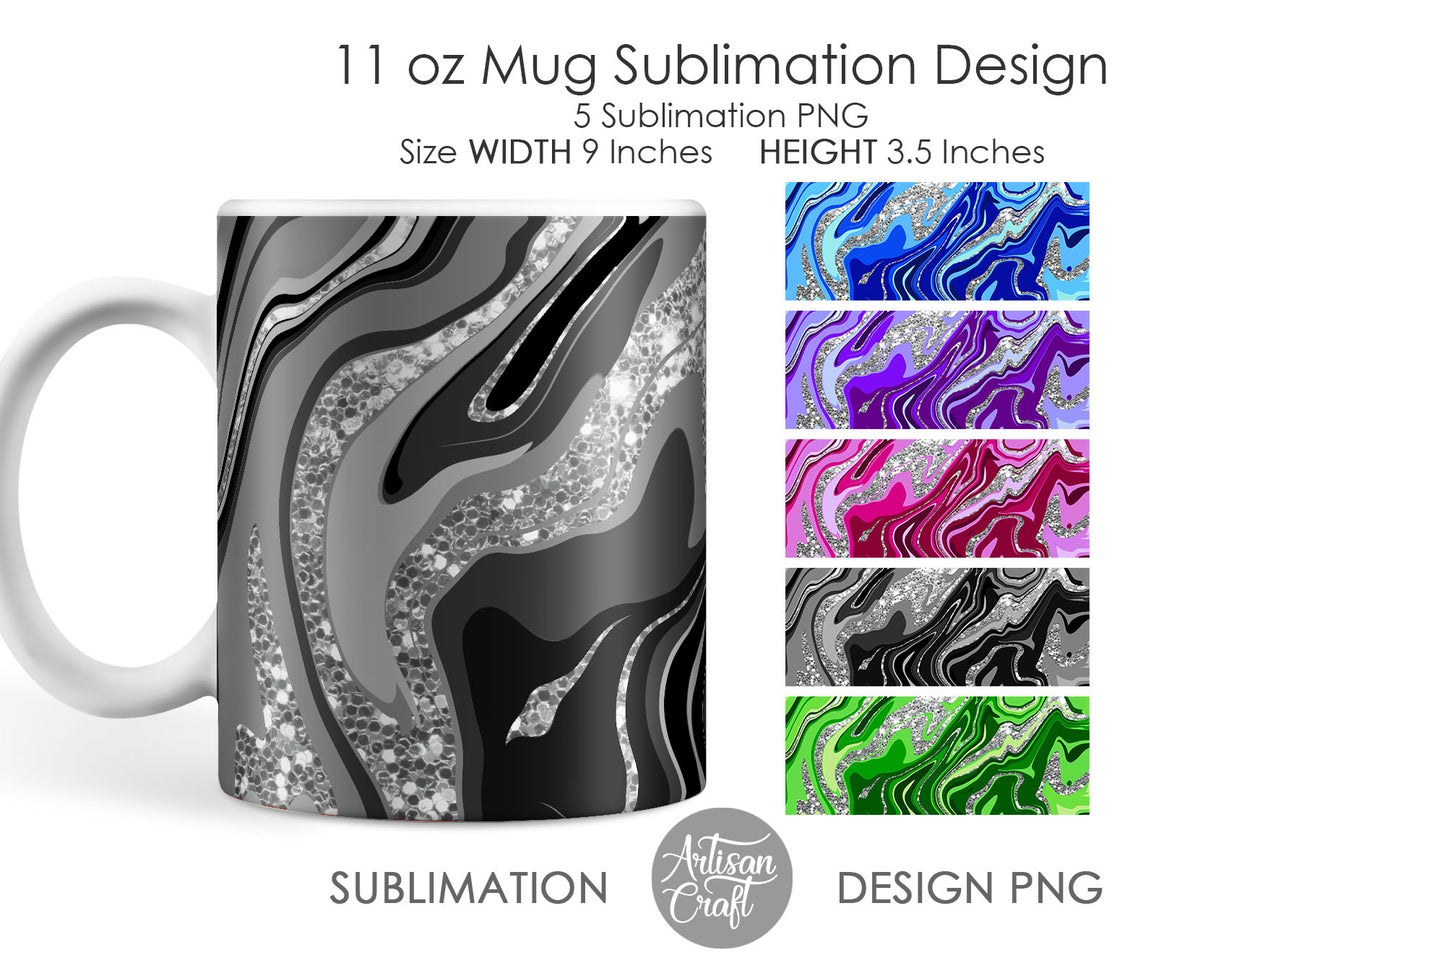 11 oz mug sublimation design with fluid art